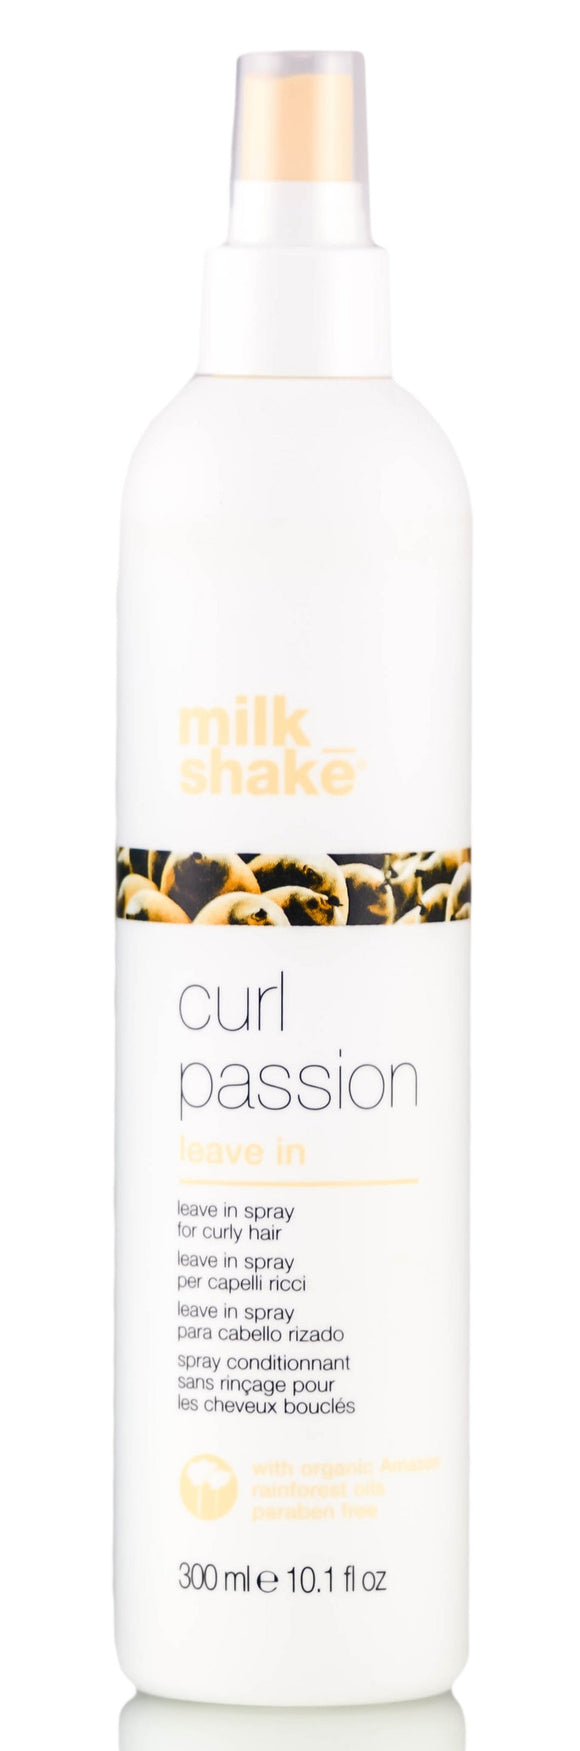 Milk Shake Curl Passion Leave In Conditioner 10.1oz